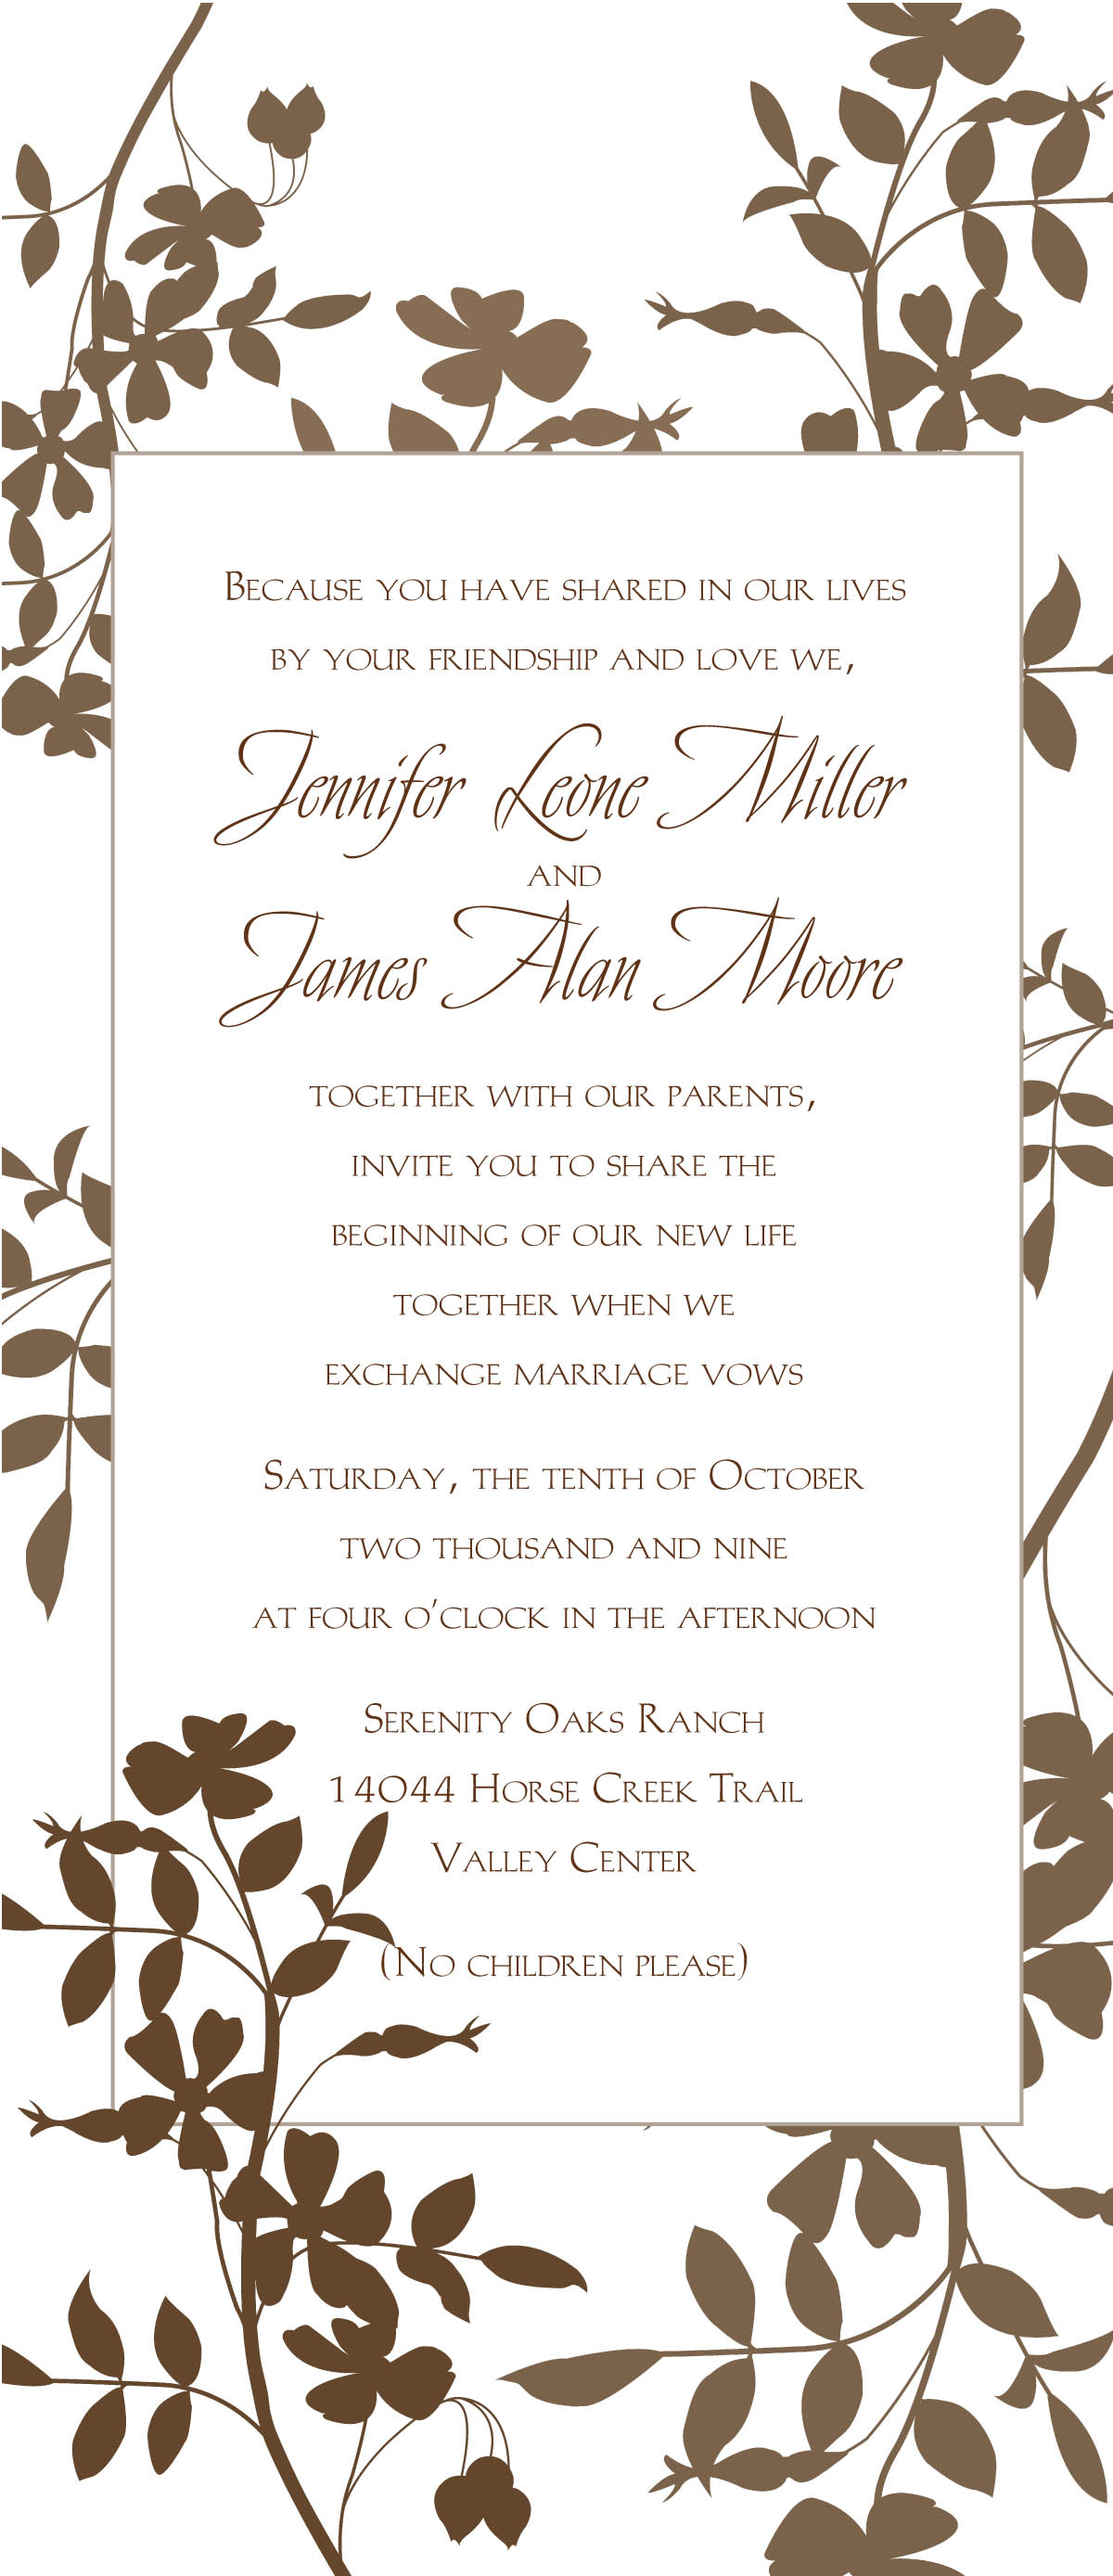 JM_JM_Wedding Invitation.jpg